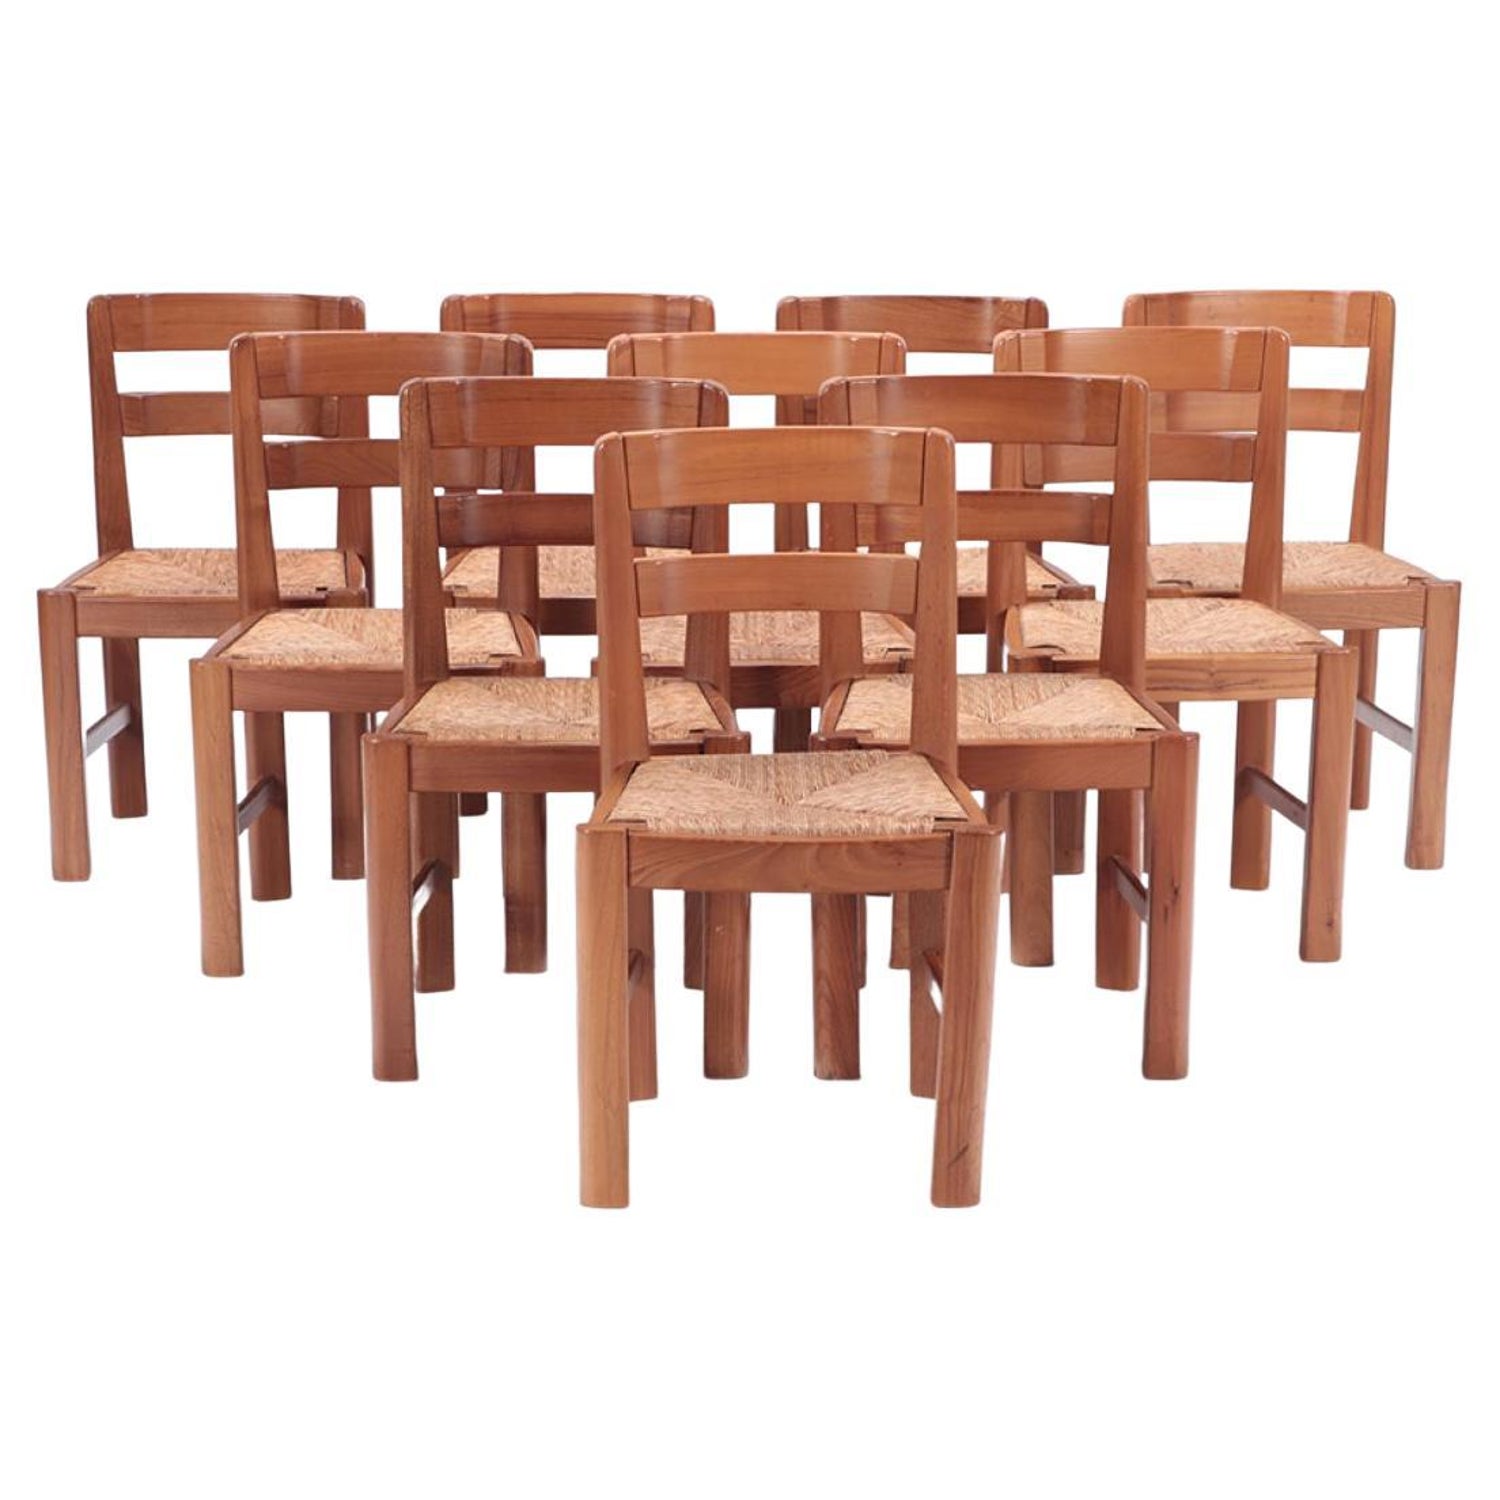 https://a.1stdibscdn.com/ten-french-cherry-rush-seat-dining-chairs-circa-1960-for-sale/f_56302/f_353926221690292890764/f_35392622_1690292891125_bg_processed.jpg?width=1500